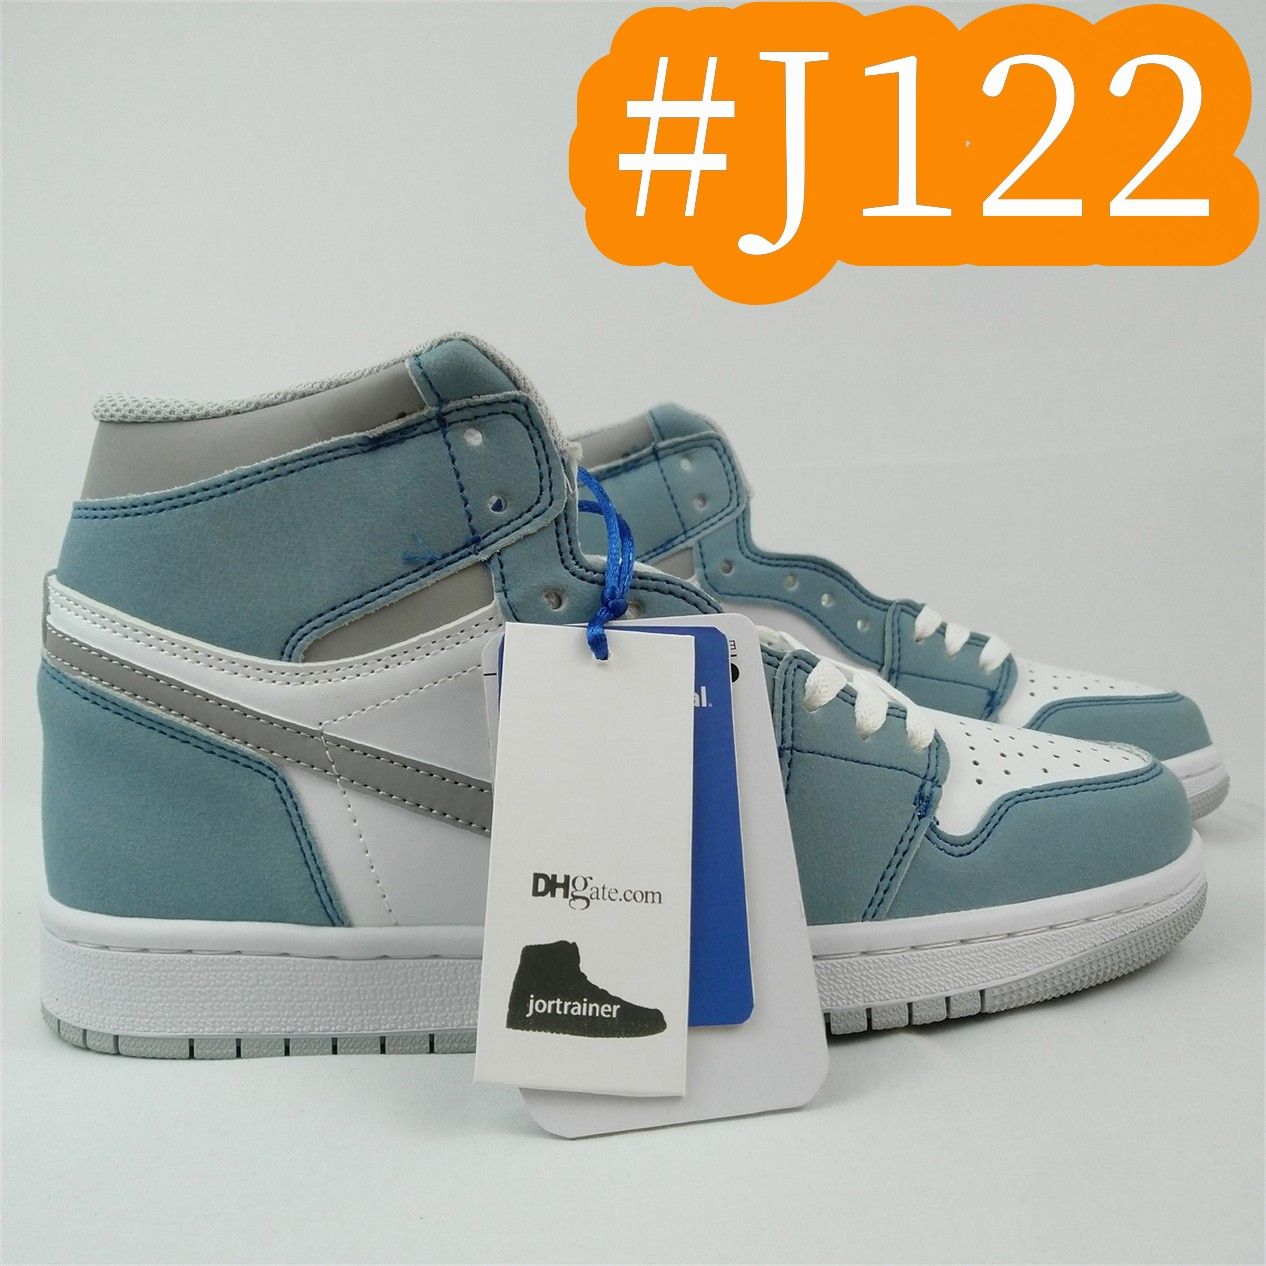 # J122